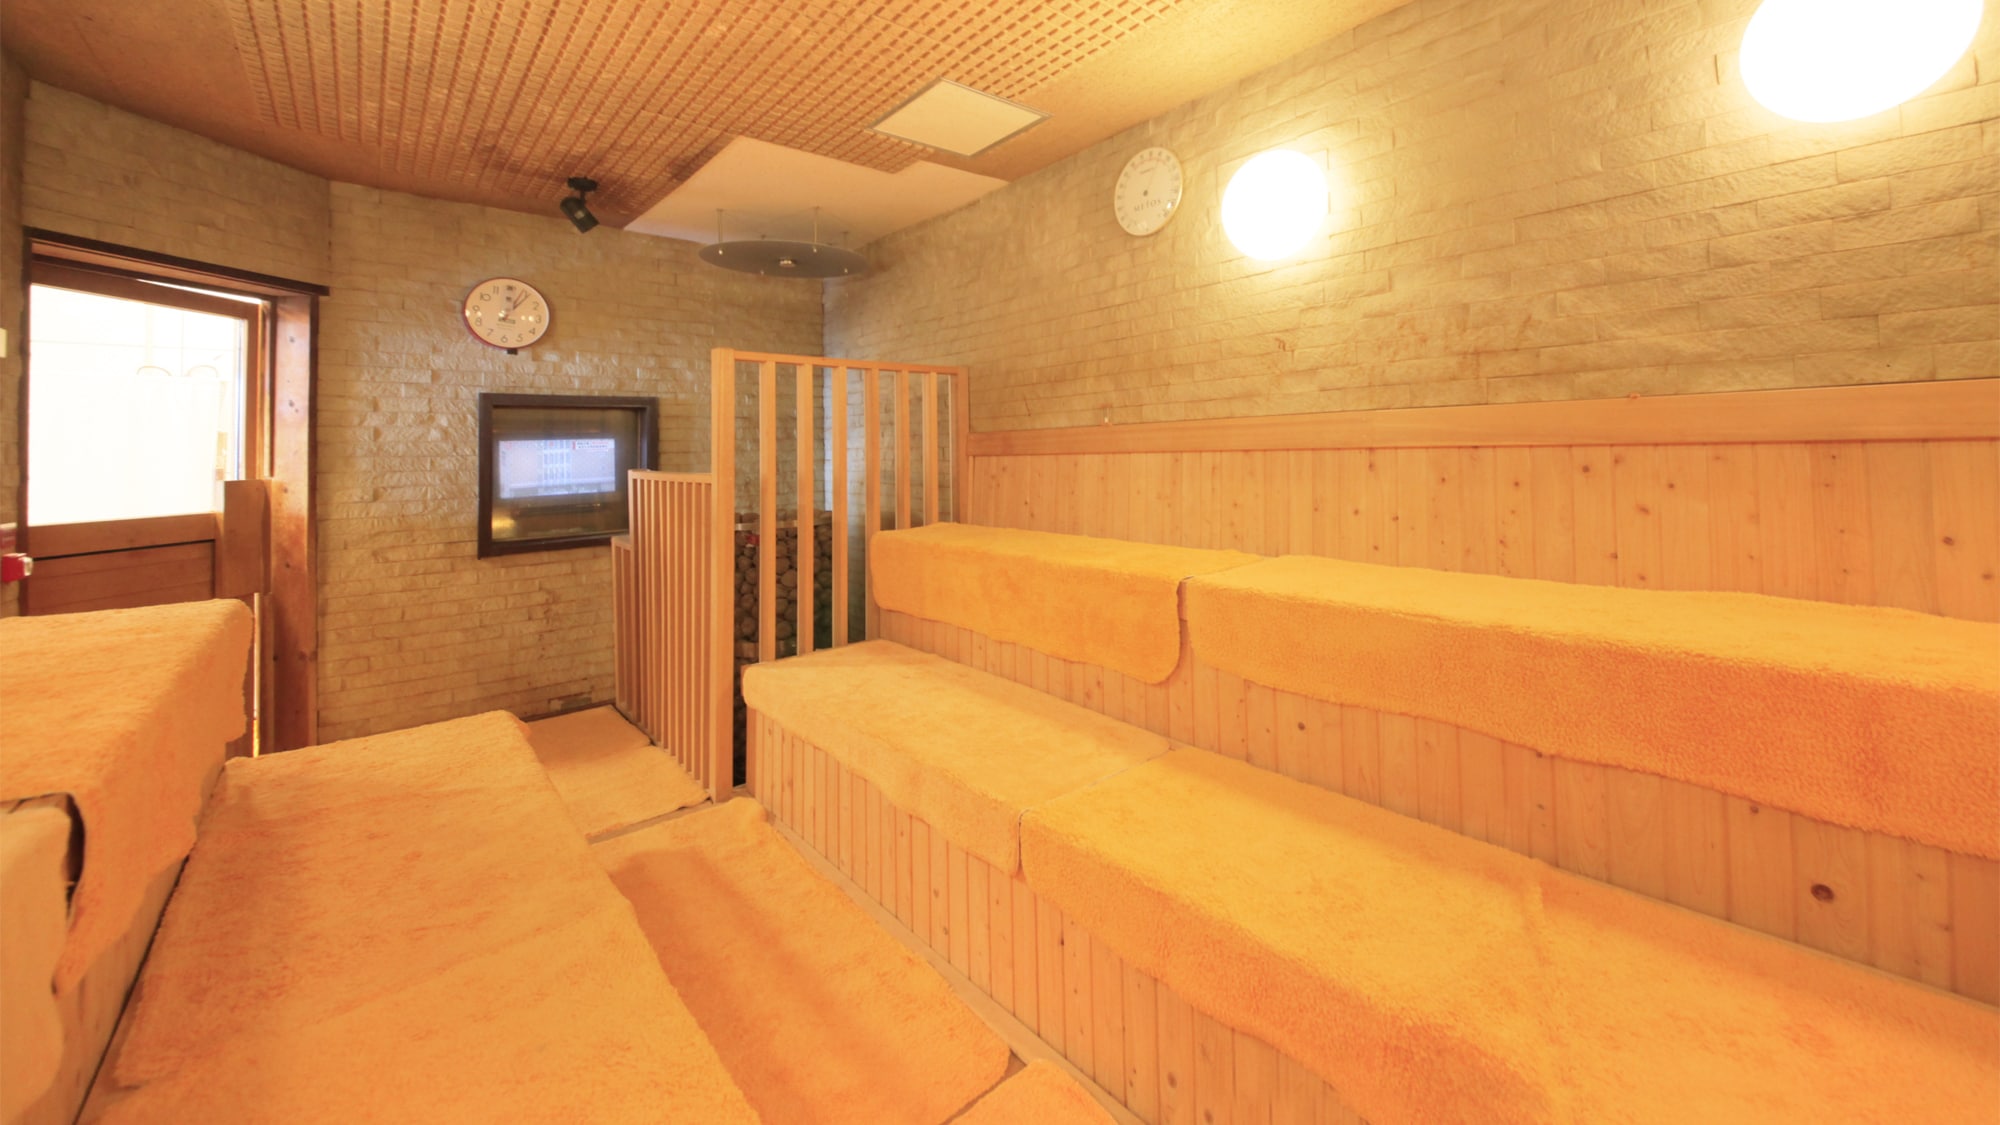 ☆ Large communal bath / sauna